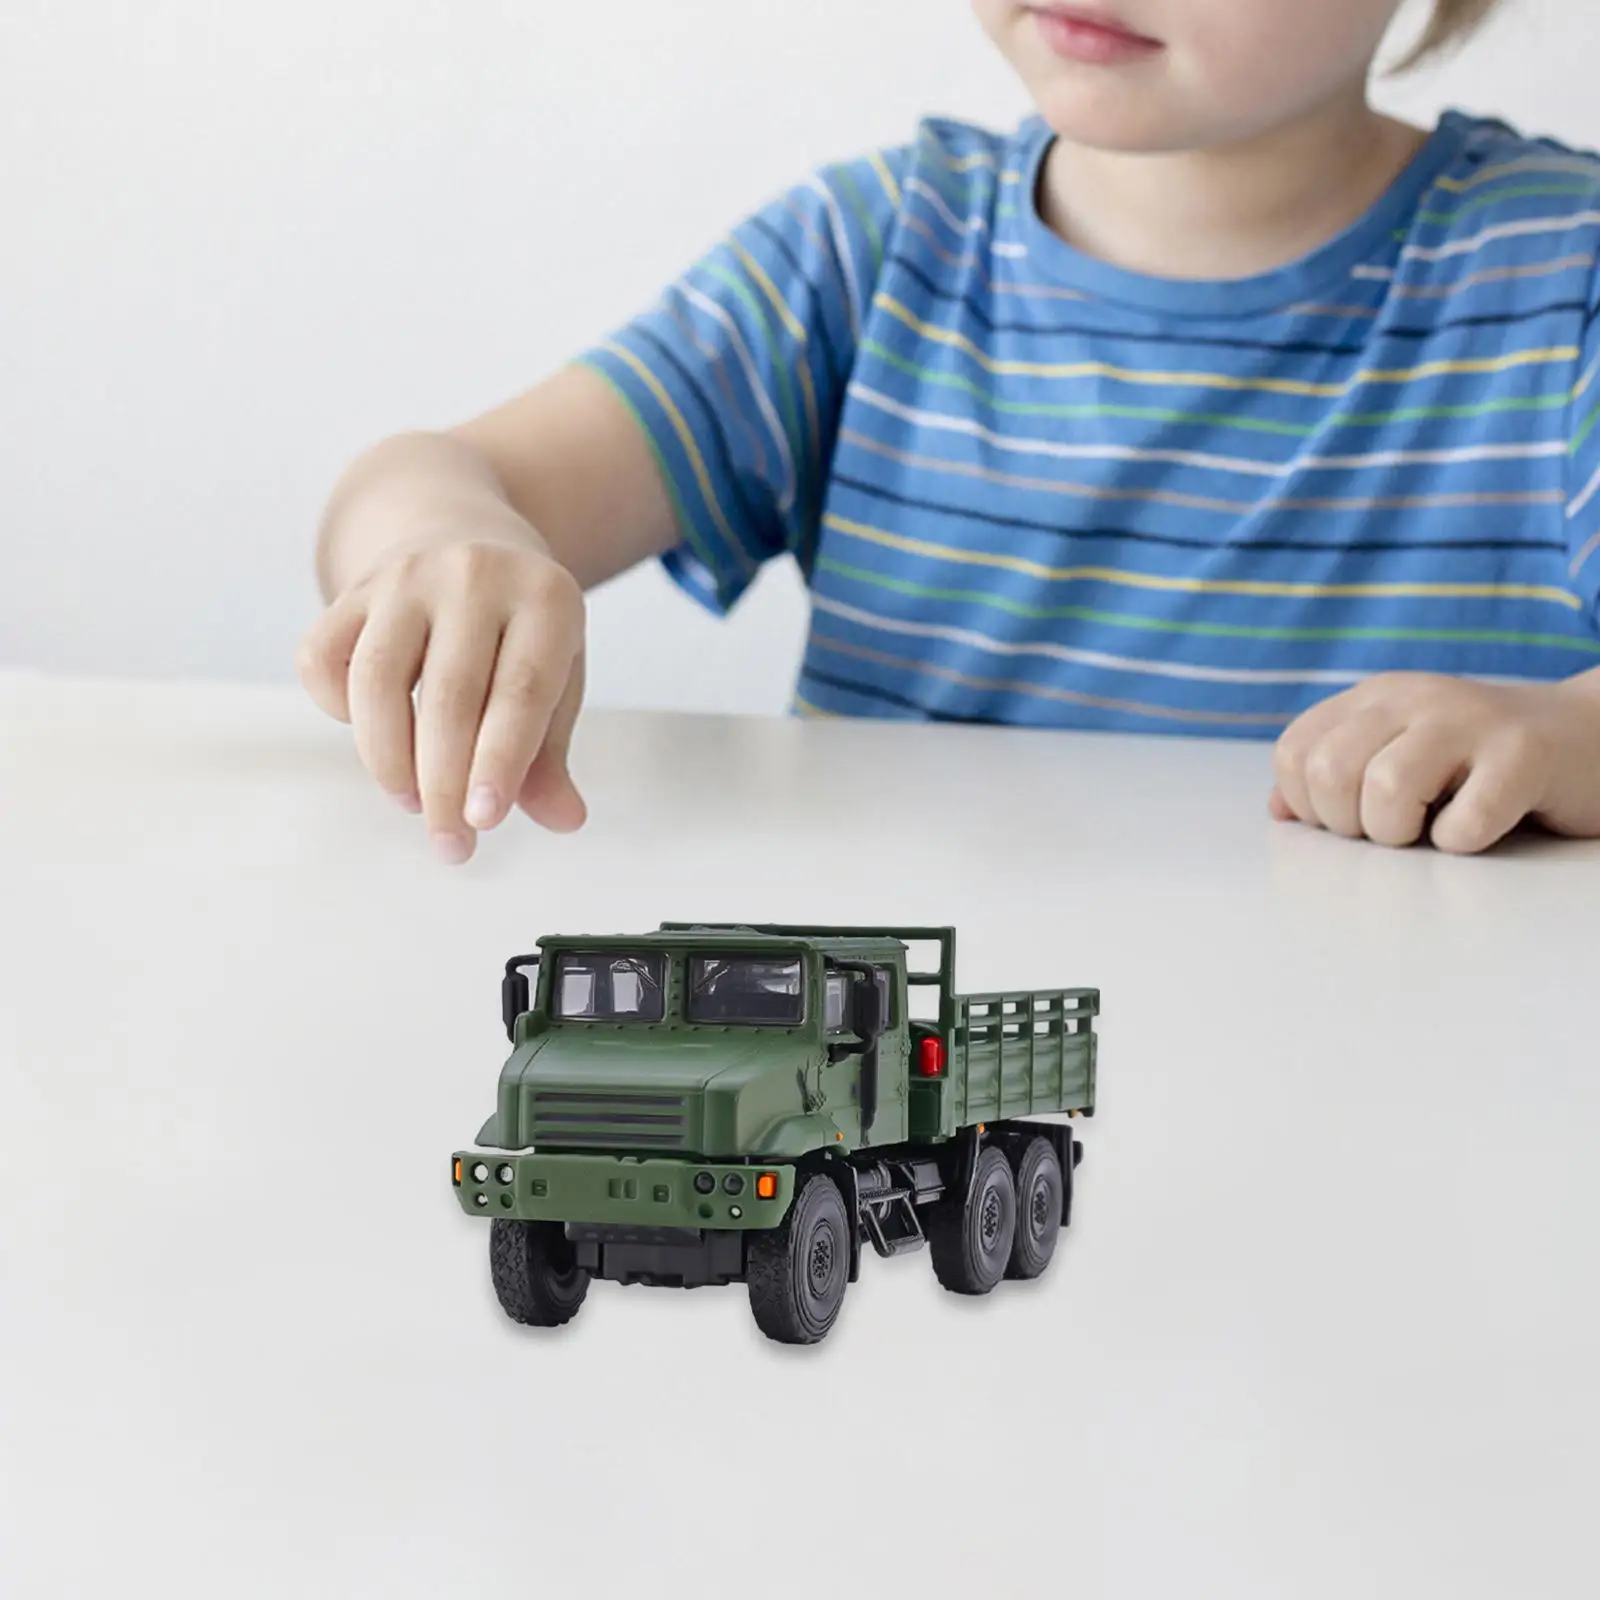 1/64 Diecast Model Car Truck Diecast Car for Kids Gifts Boy Girl Children